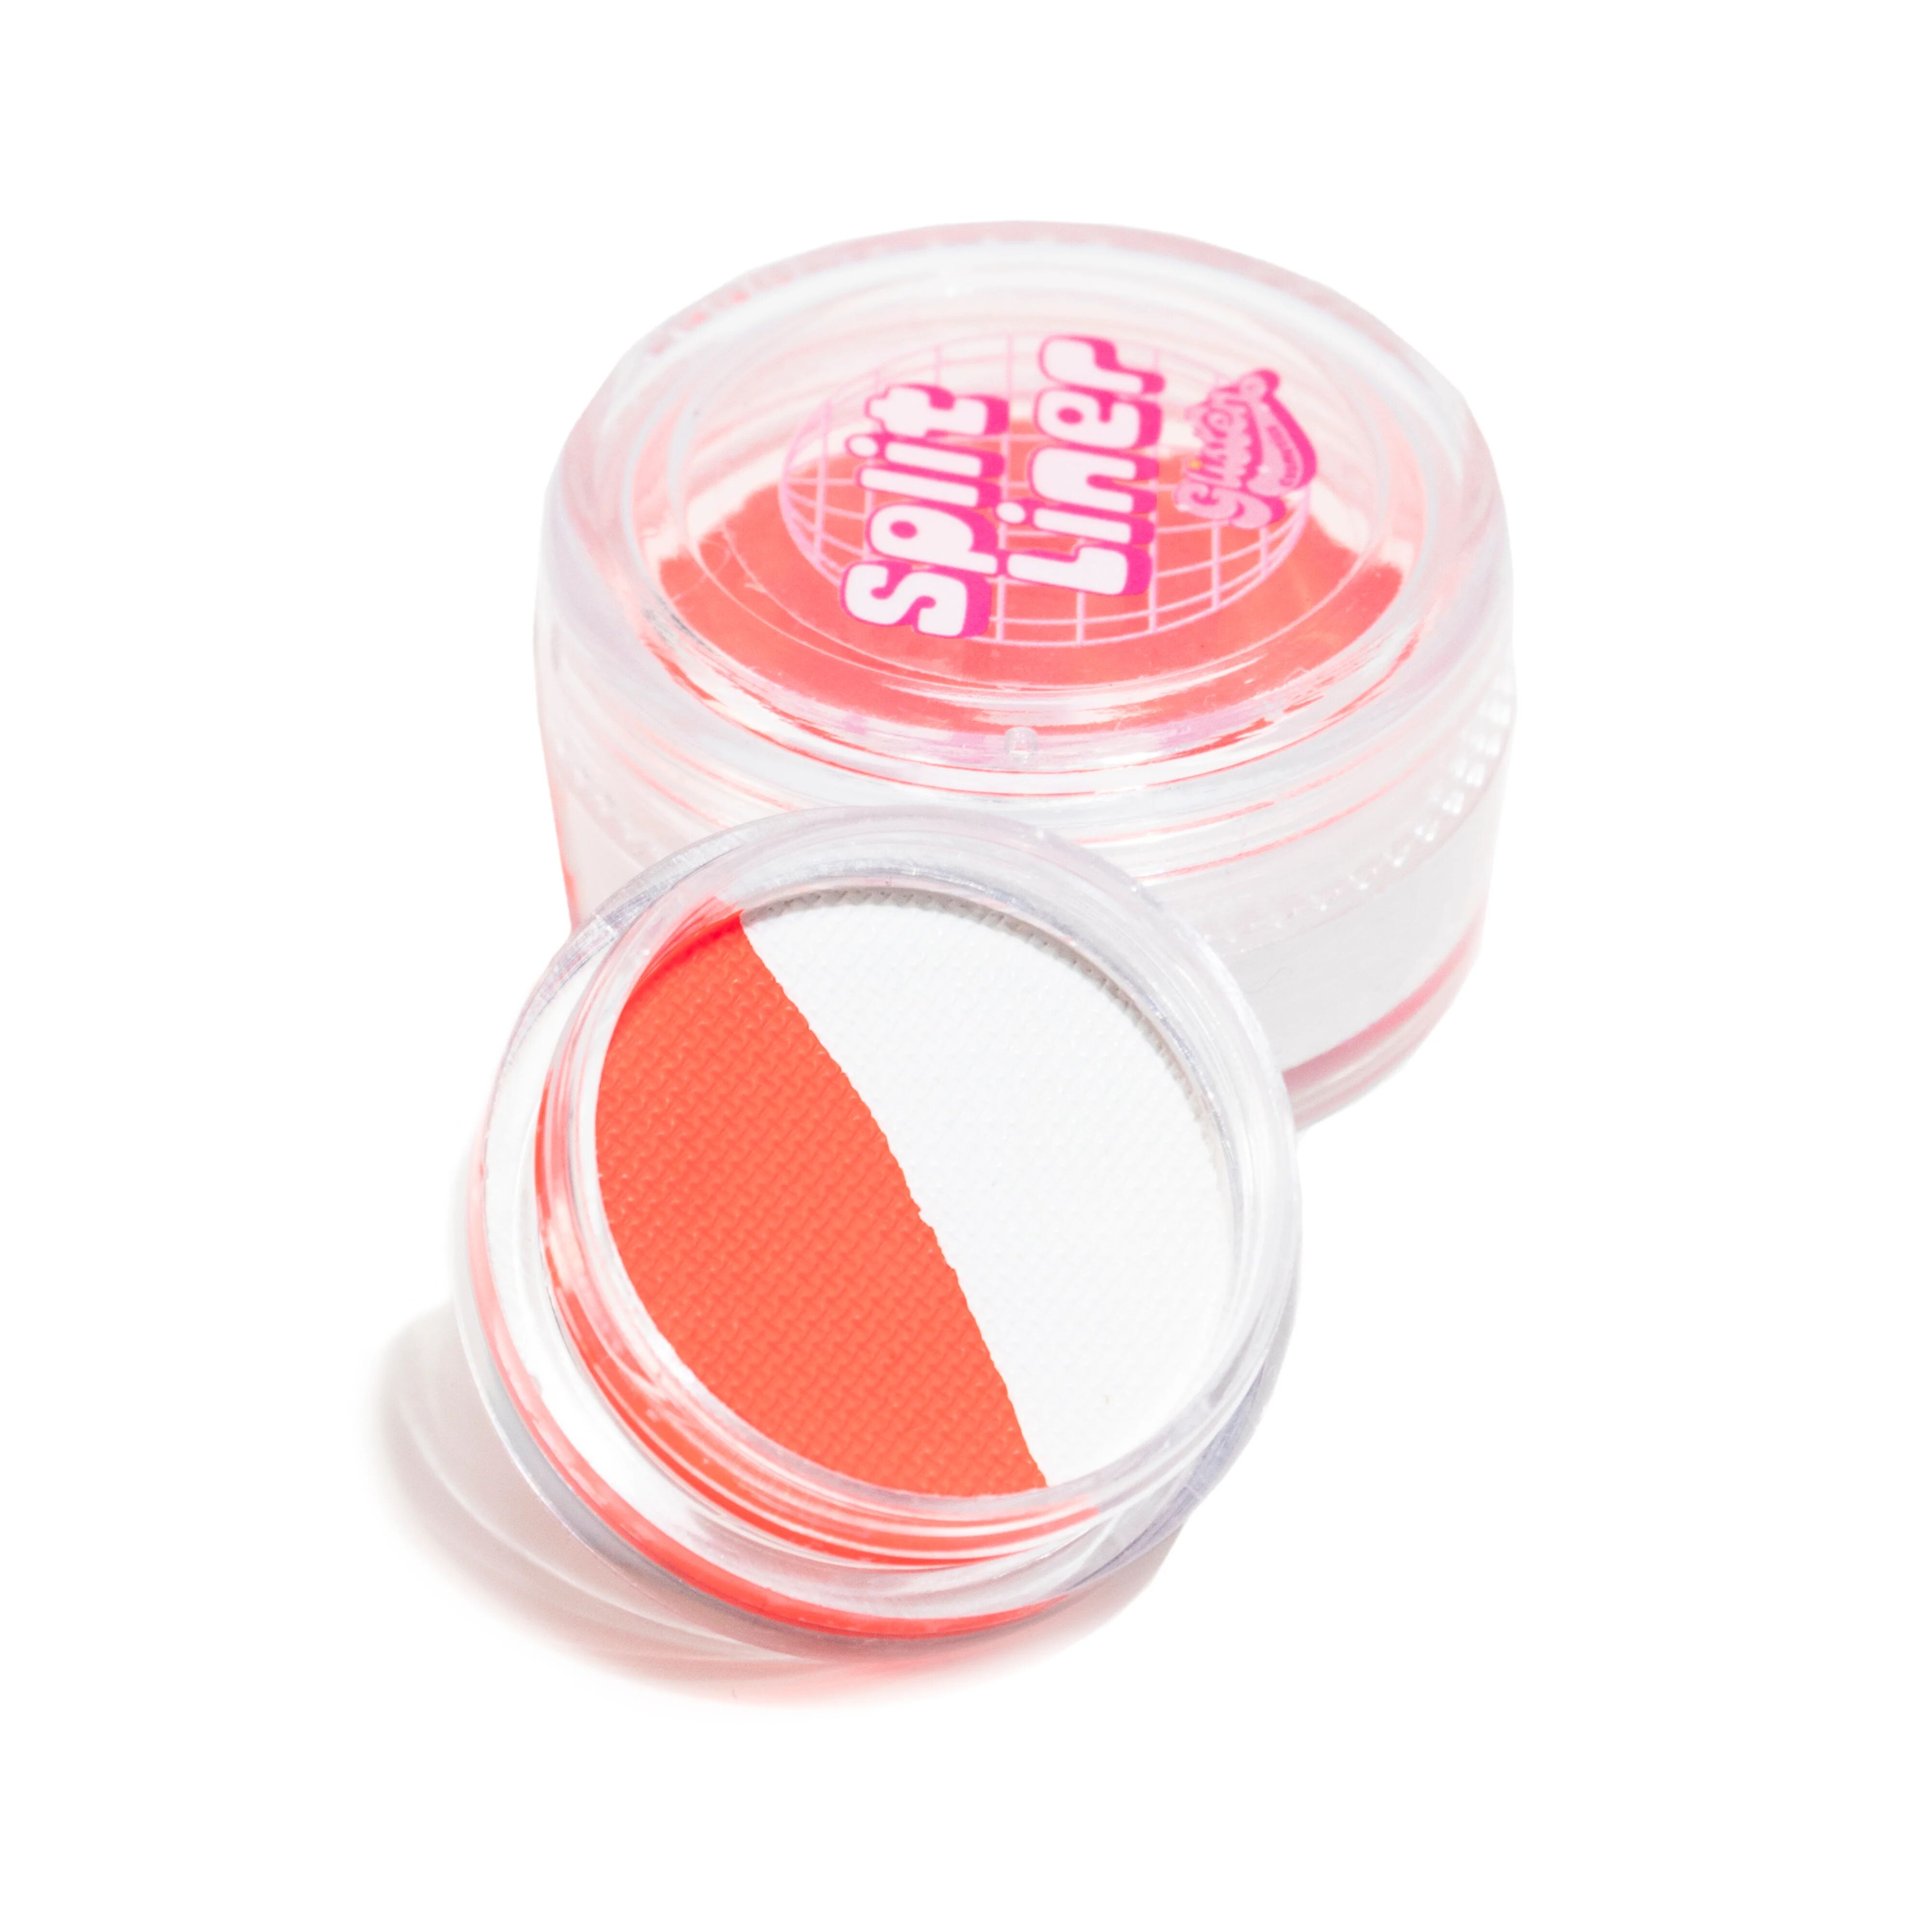 Glisten Cosmetics Peachy Cream (UV Orange & White) Split Liner - Eyeliner - Glisten Cosm Small - 3g